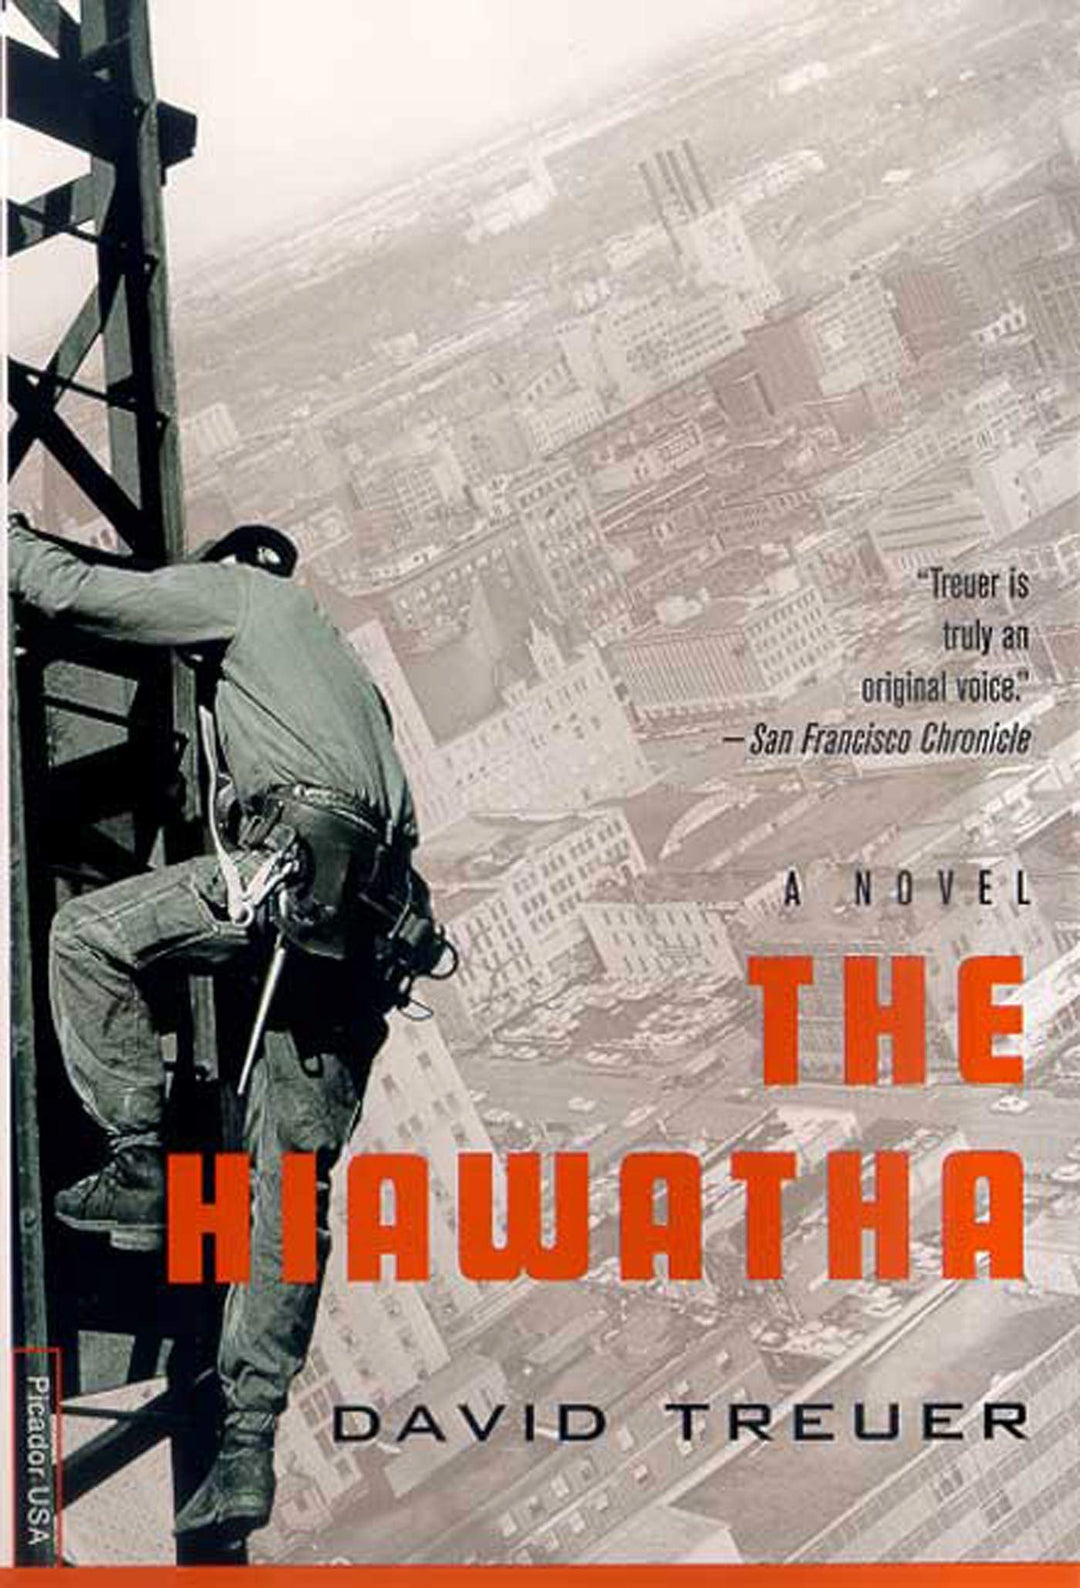 The Hiawatha by David Treuer